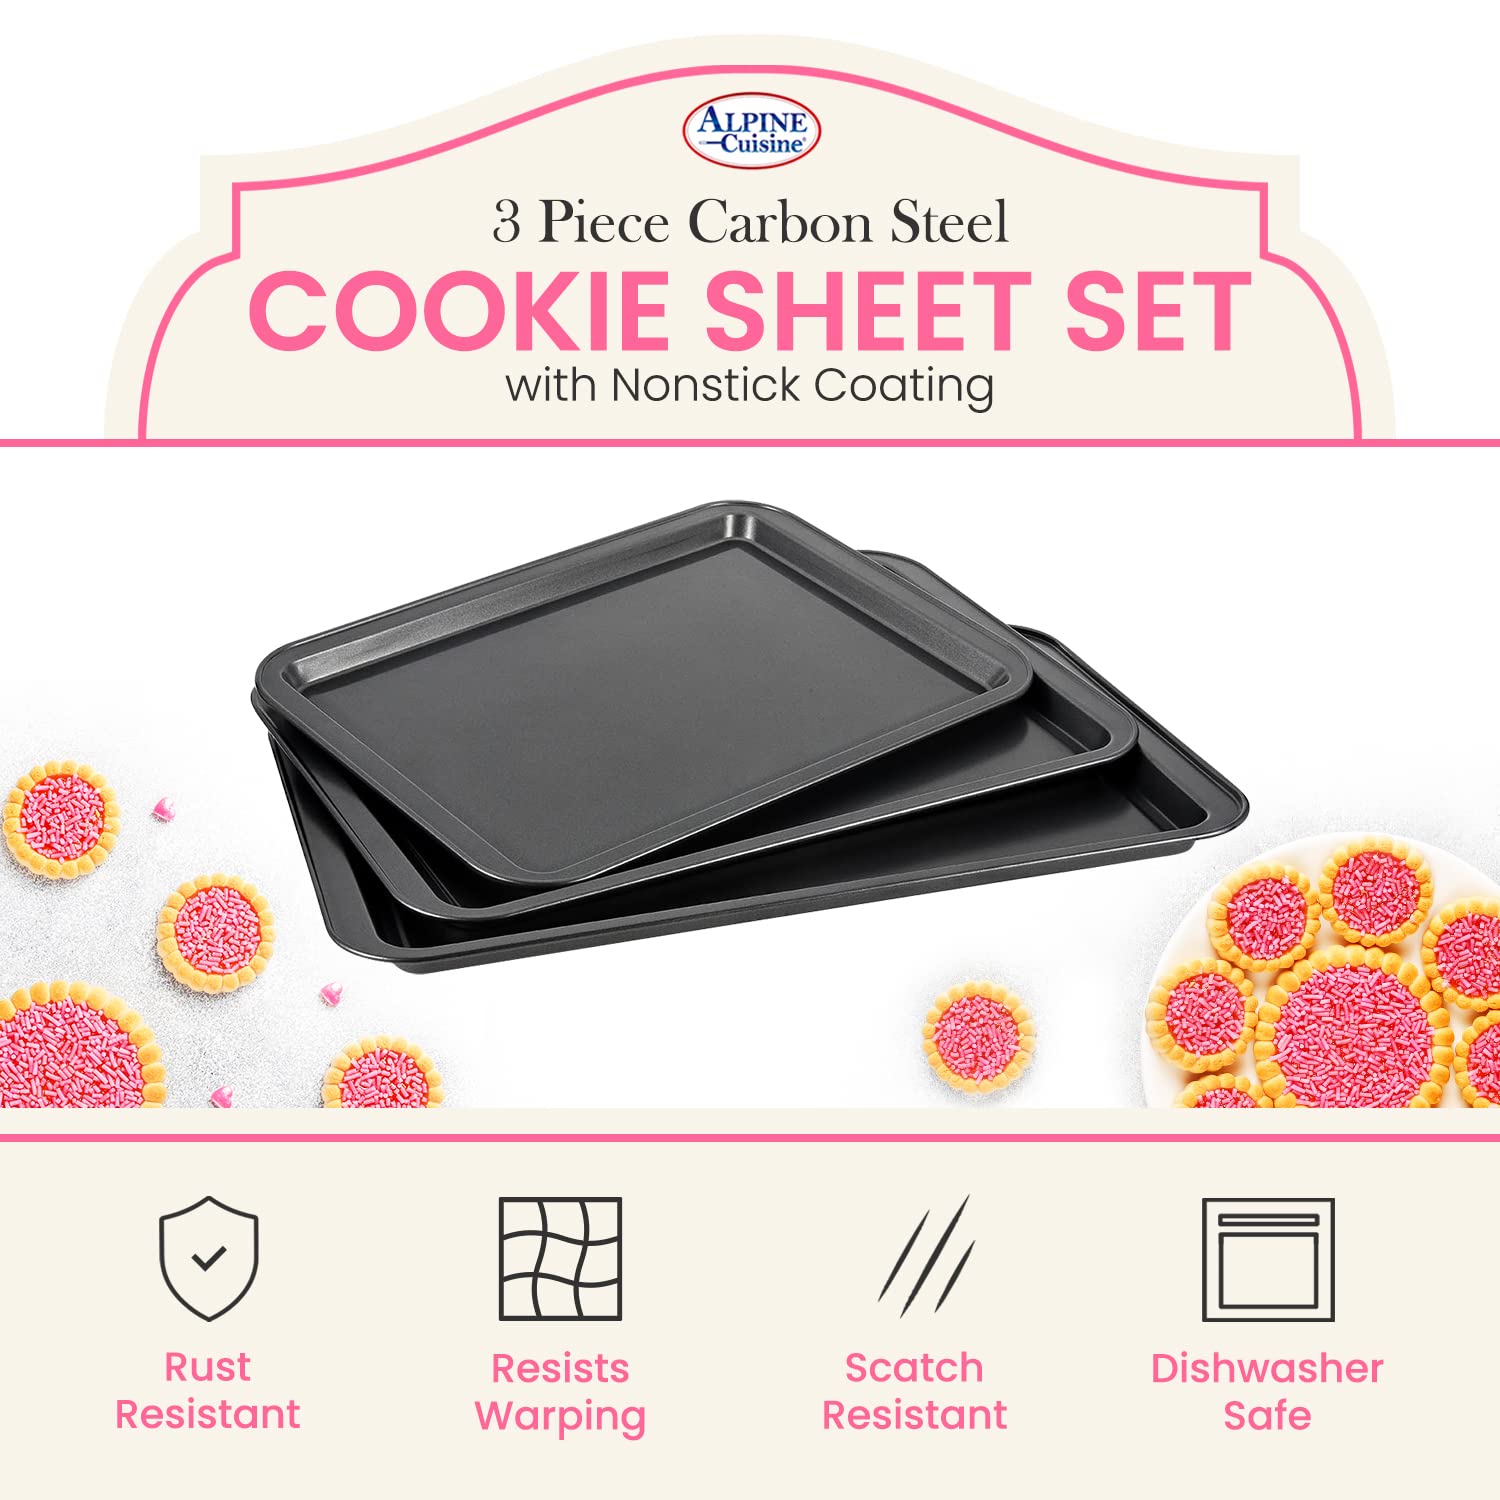 Cookie Sheet Set - Shop